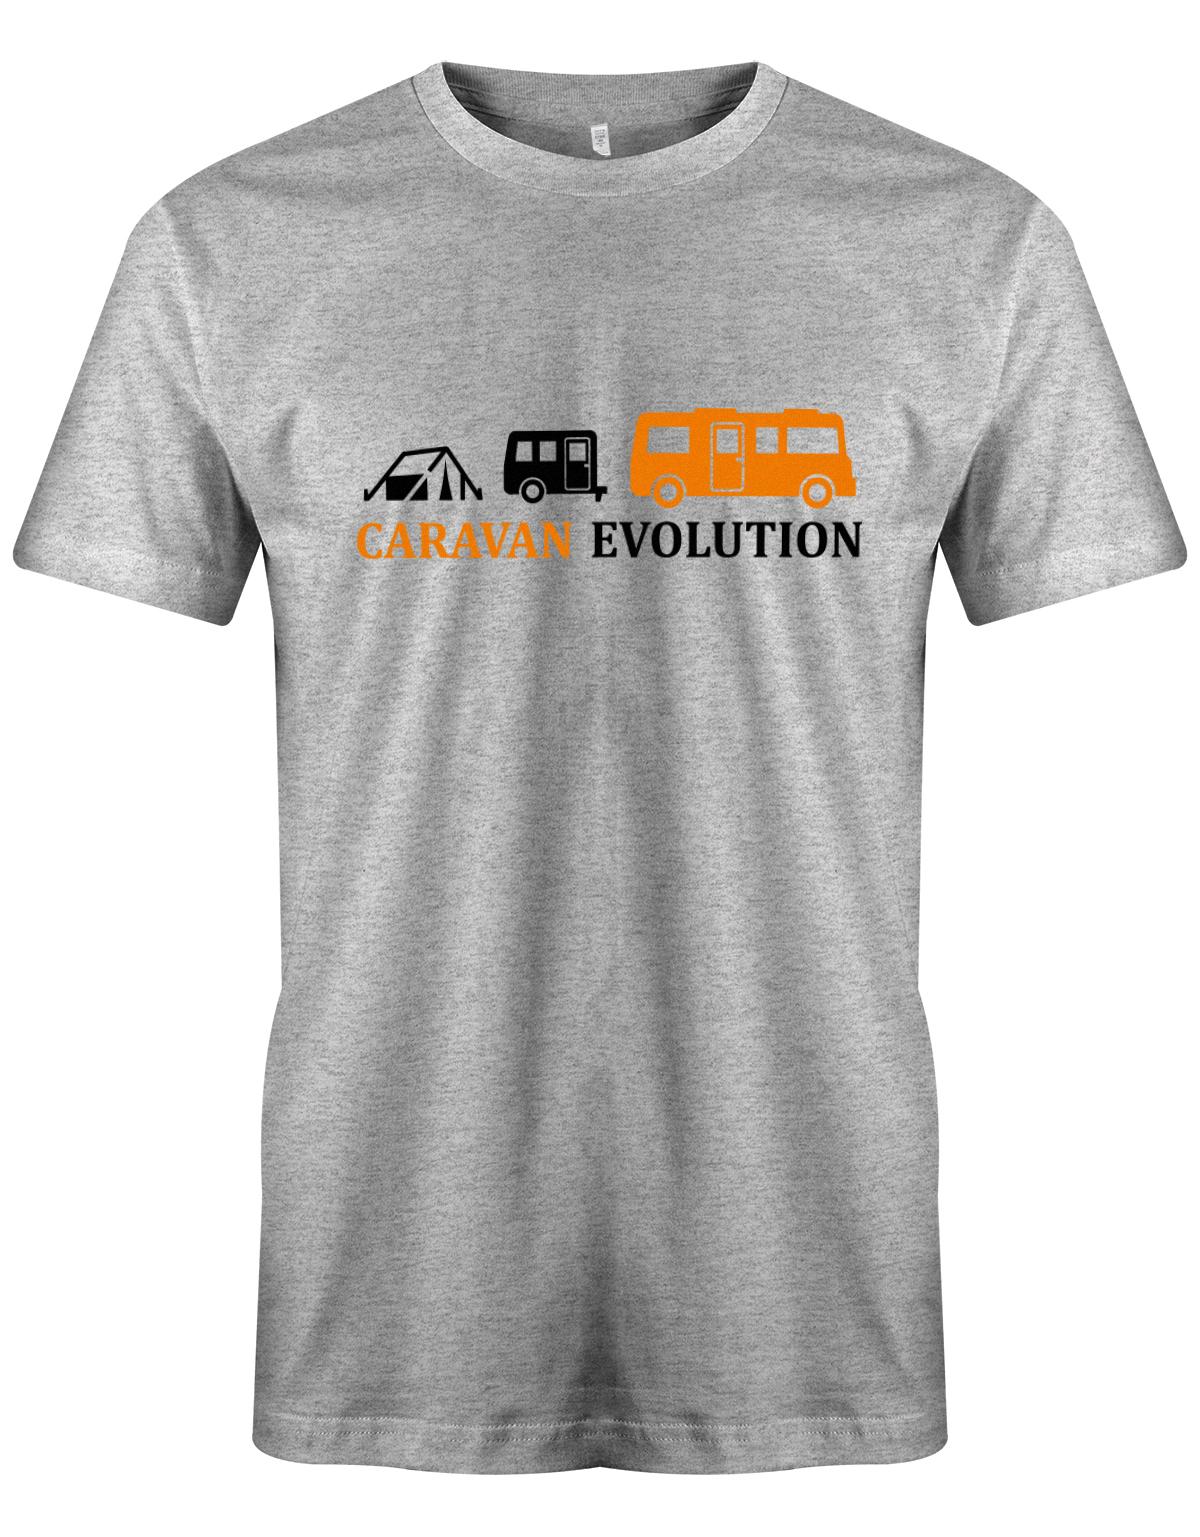 Caravan-Evolution-Herren-Shirt-Grau